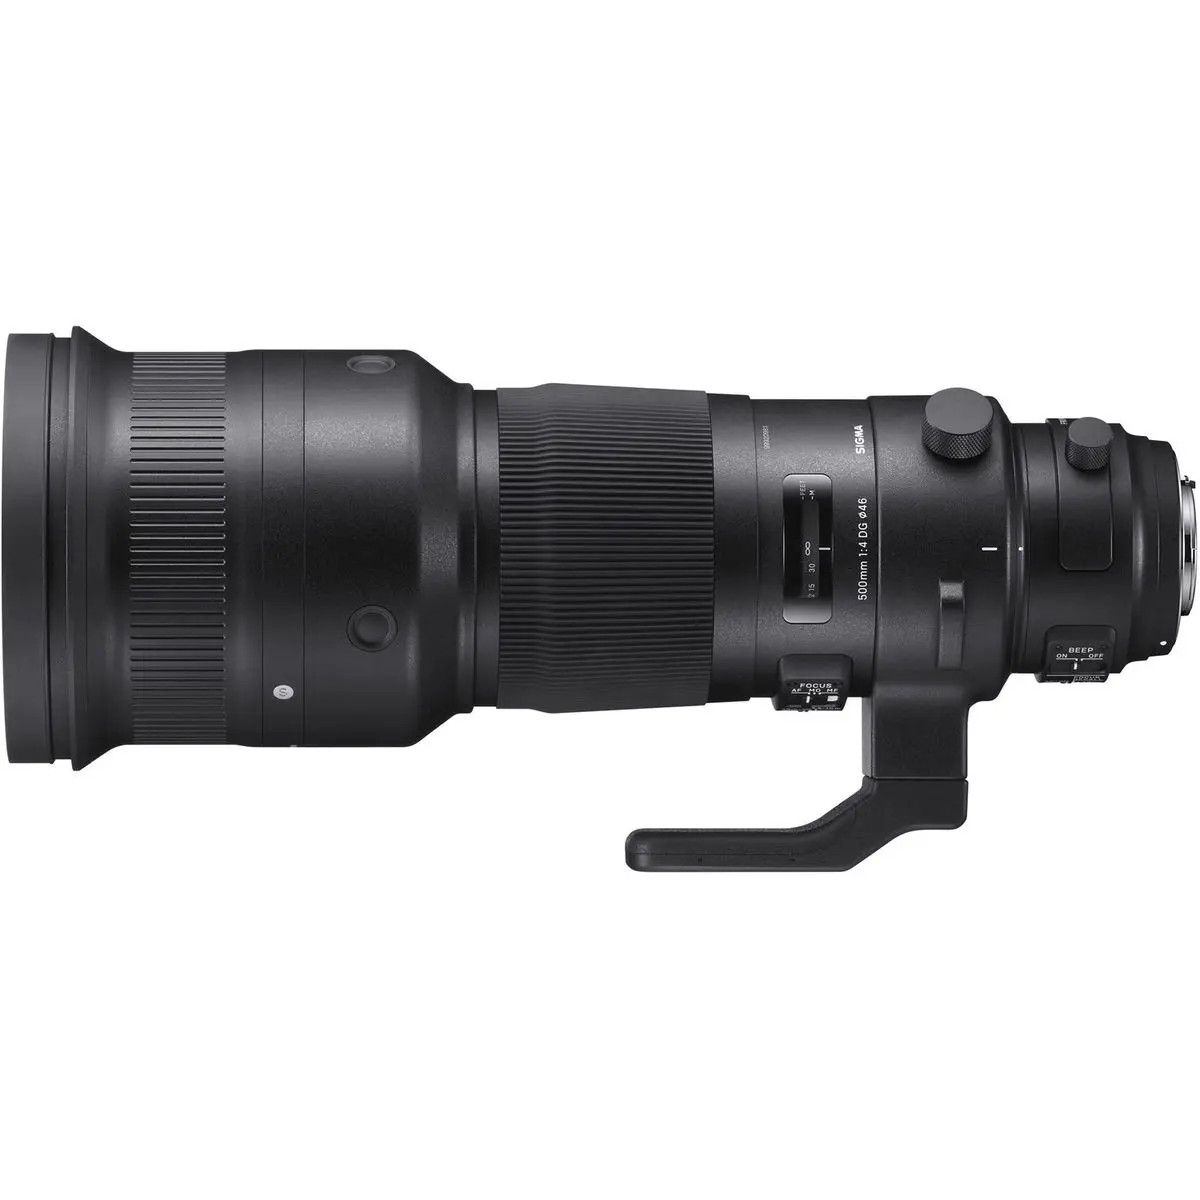 1. Sigma 500mm F4 DG OS HSM | Sports (Canon) Lens